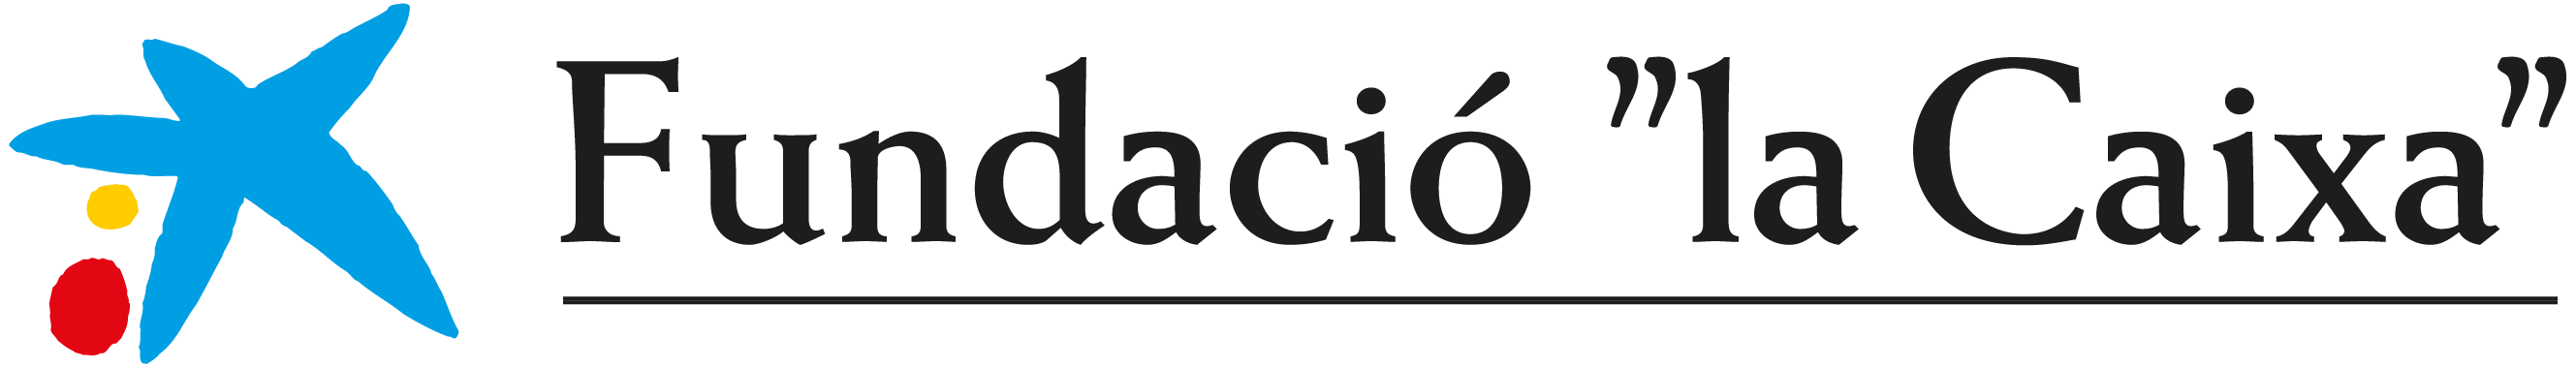 Logo_FundaciolaCaixa_CAT-01